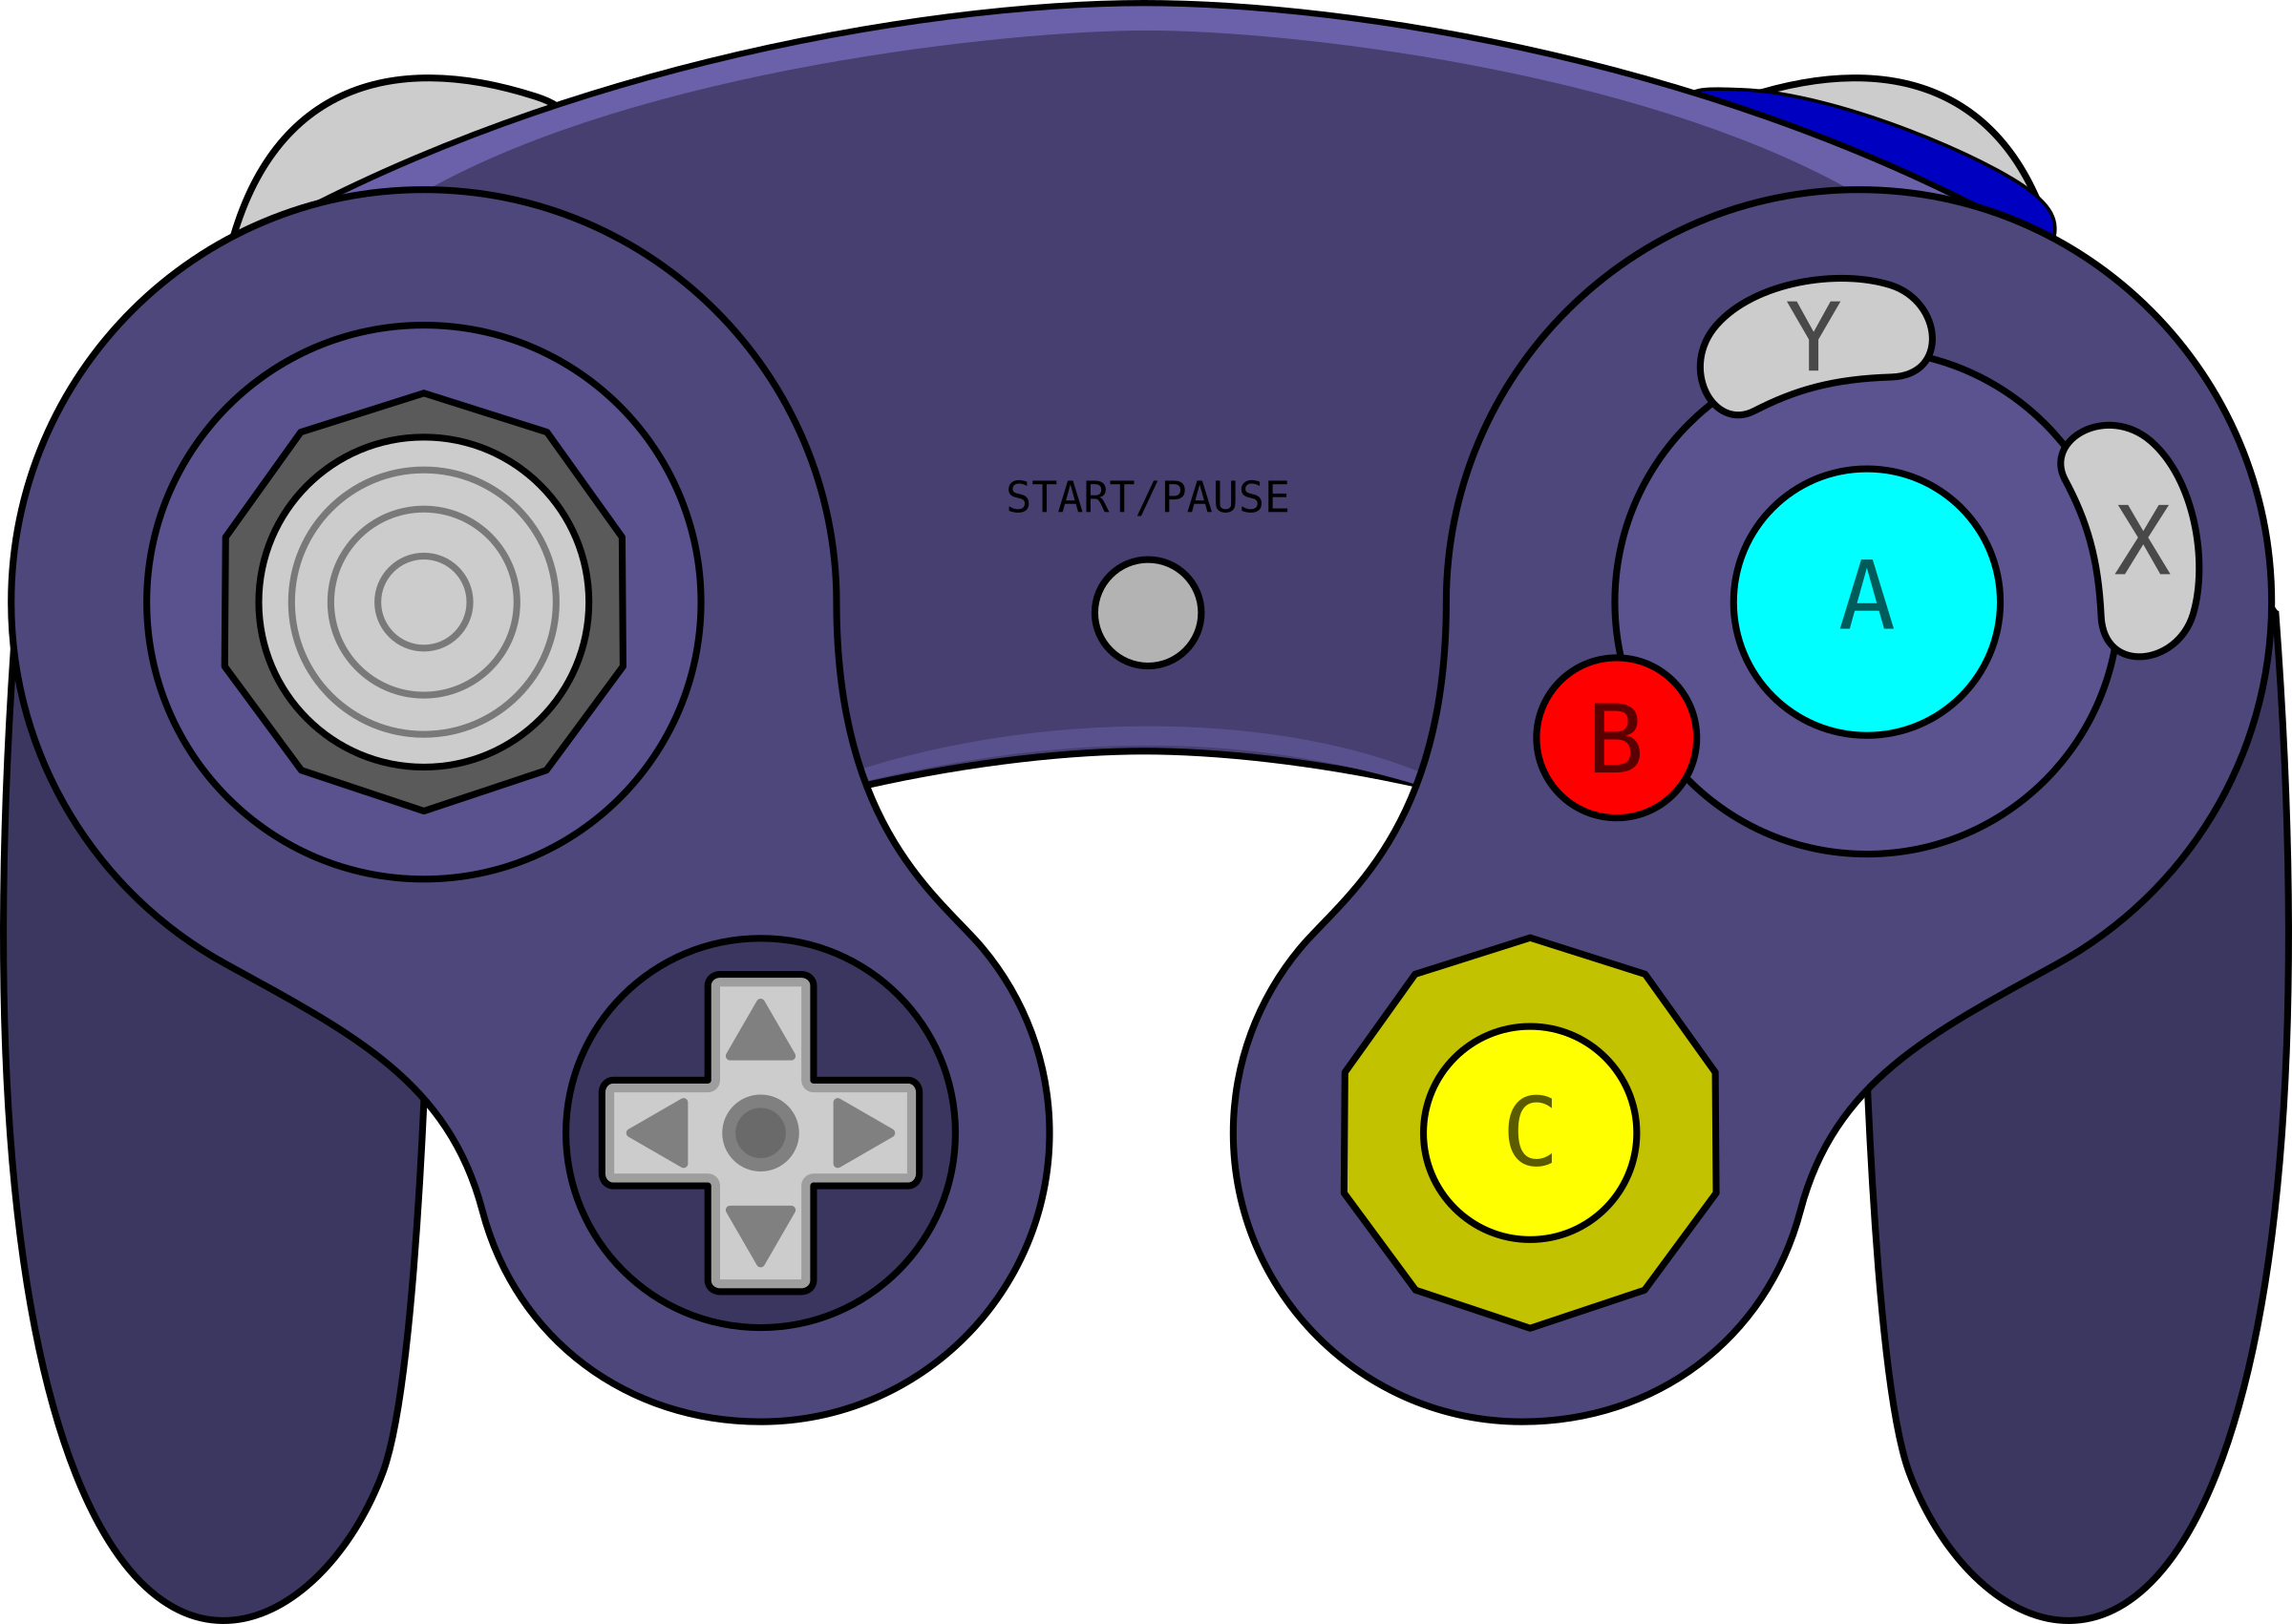 A Purple Video Game Controller